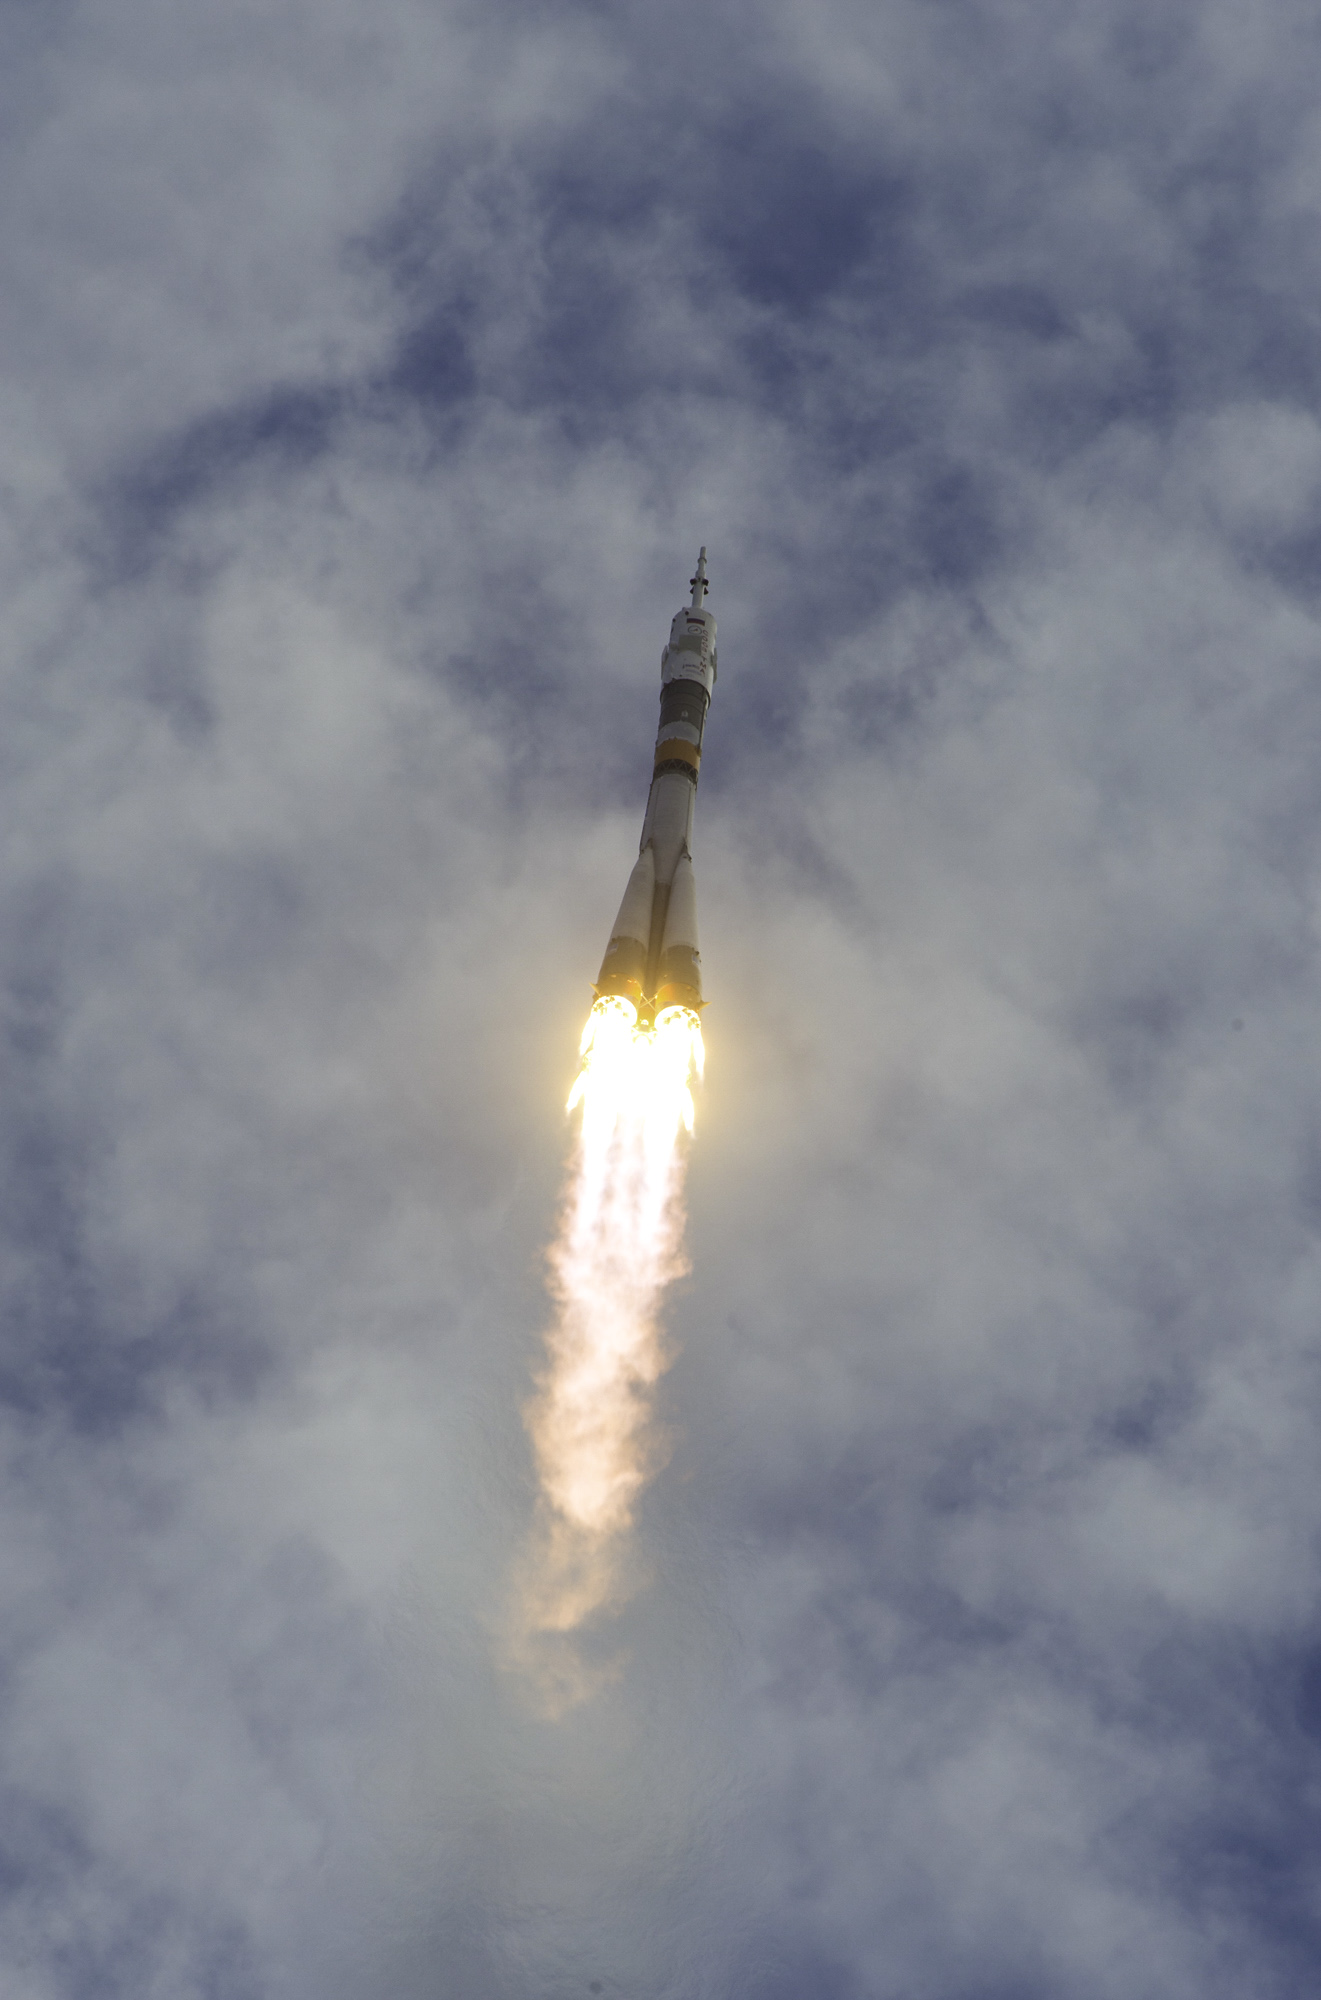  The Soyuz TMA-05M rocket launches from the Baikonur Cosmodrome in Kazakhstan on Sunday, July 15, 2012 carrying Expedition 32 Soyuz Commander Yuri Malenchenko, NASA Flight Engineer Sunita Williams and JAXA (Japan Aerospace Exploration Agency) Flight 